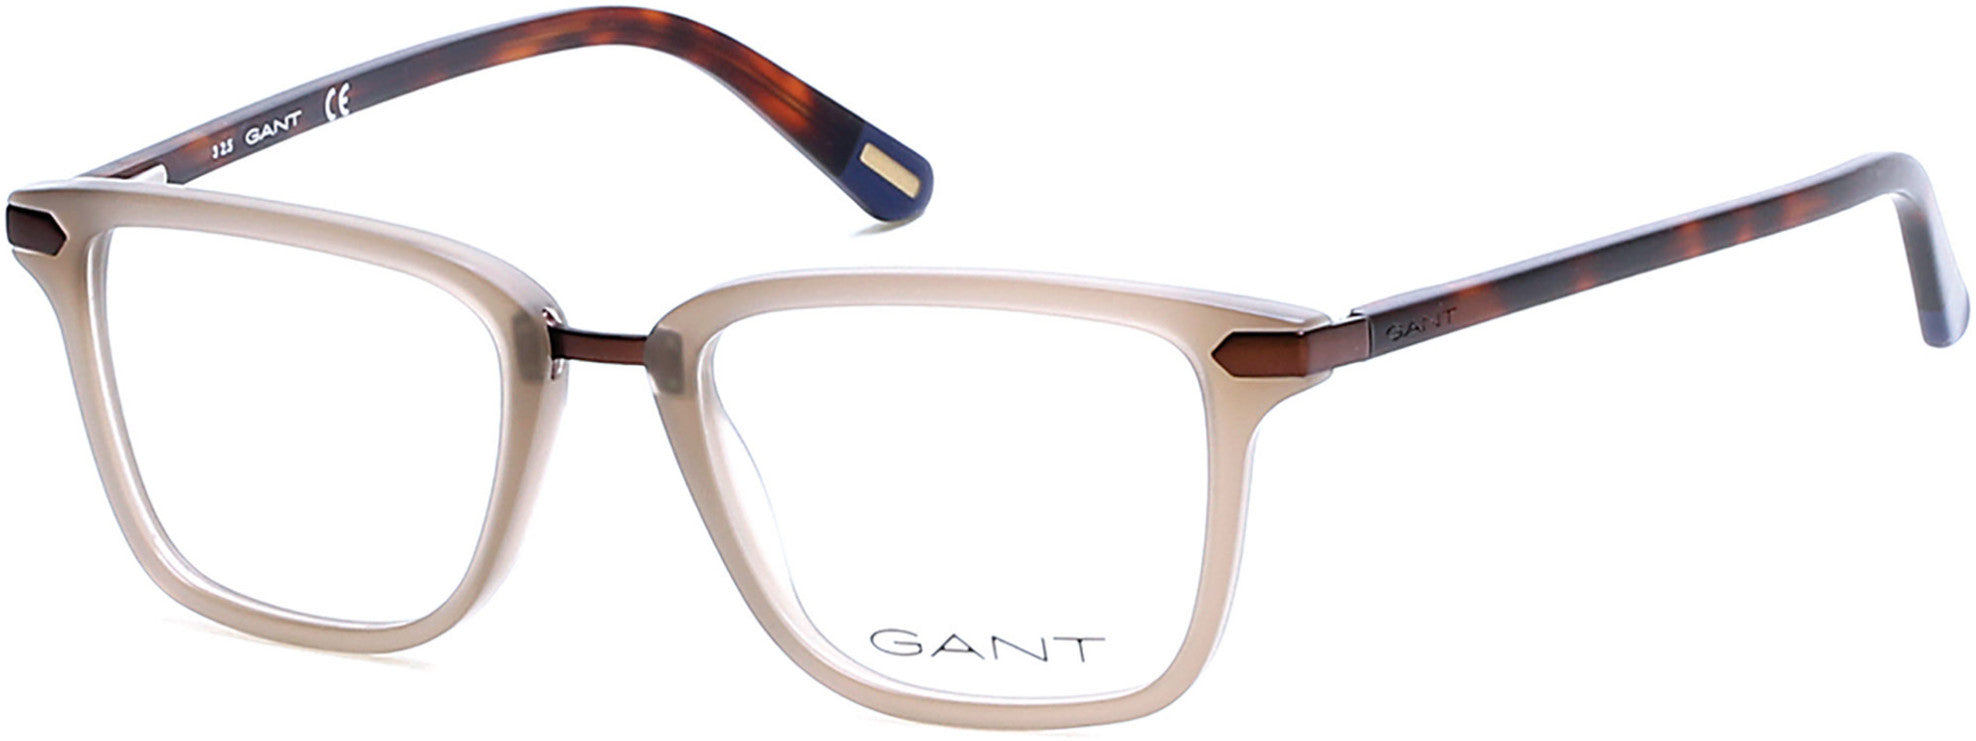 Gant GA3116 Geometric Eyeglasses 020-020 - Grey/other